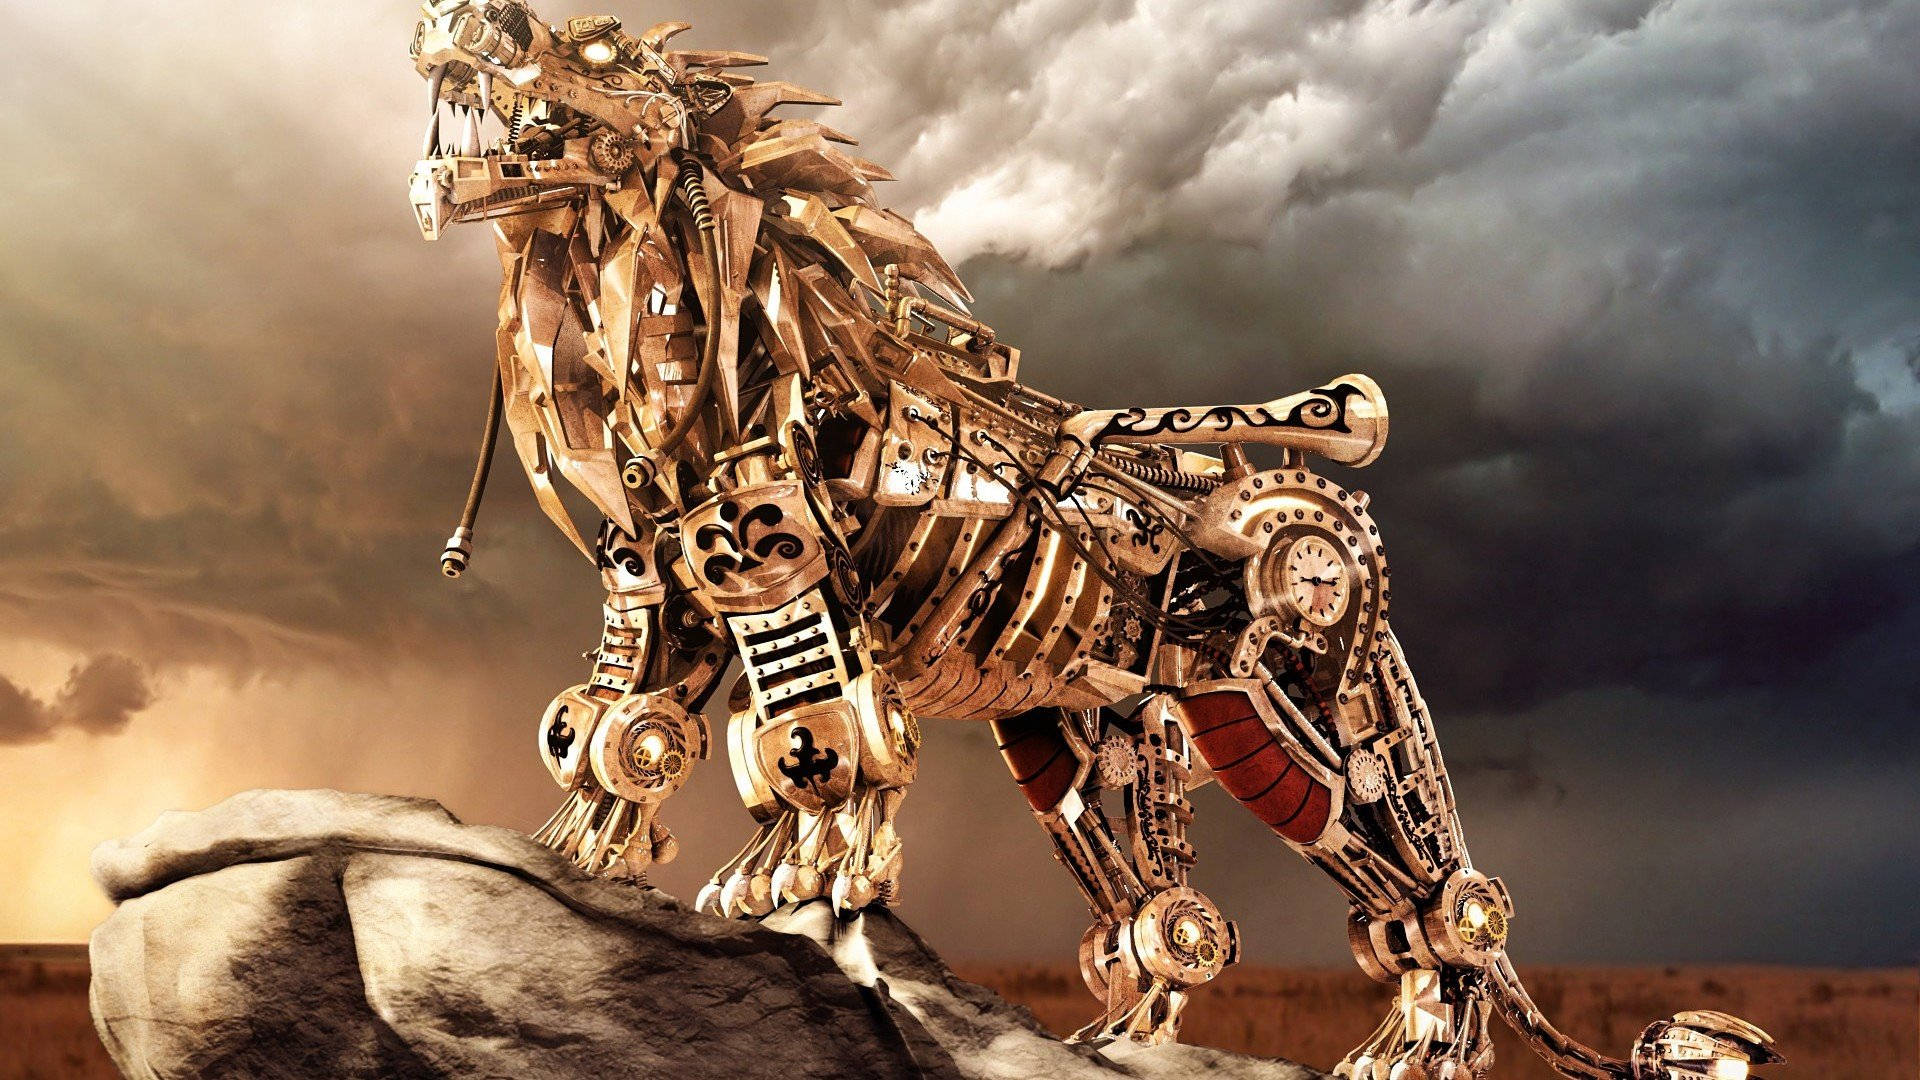 Golden Lion Robot Background